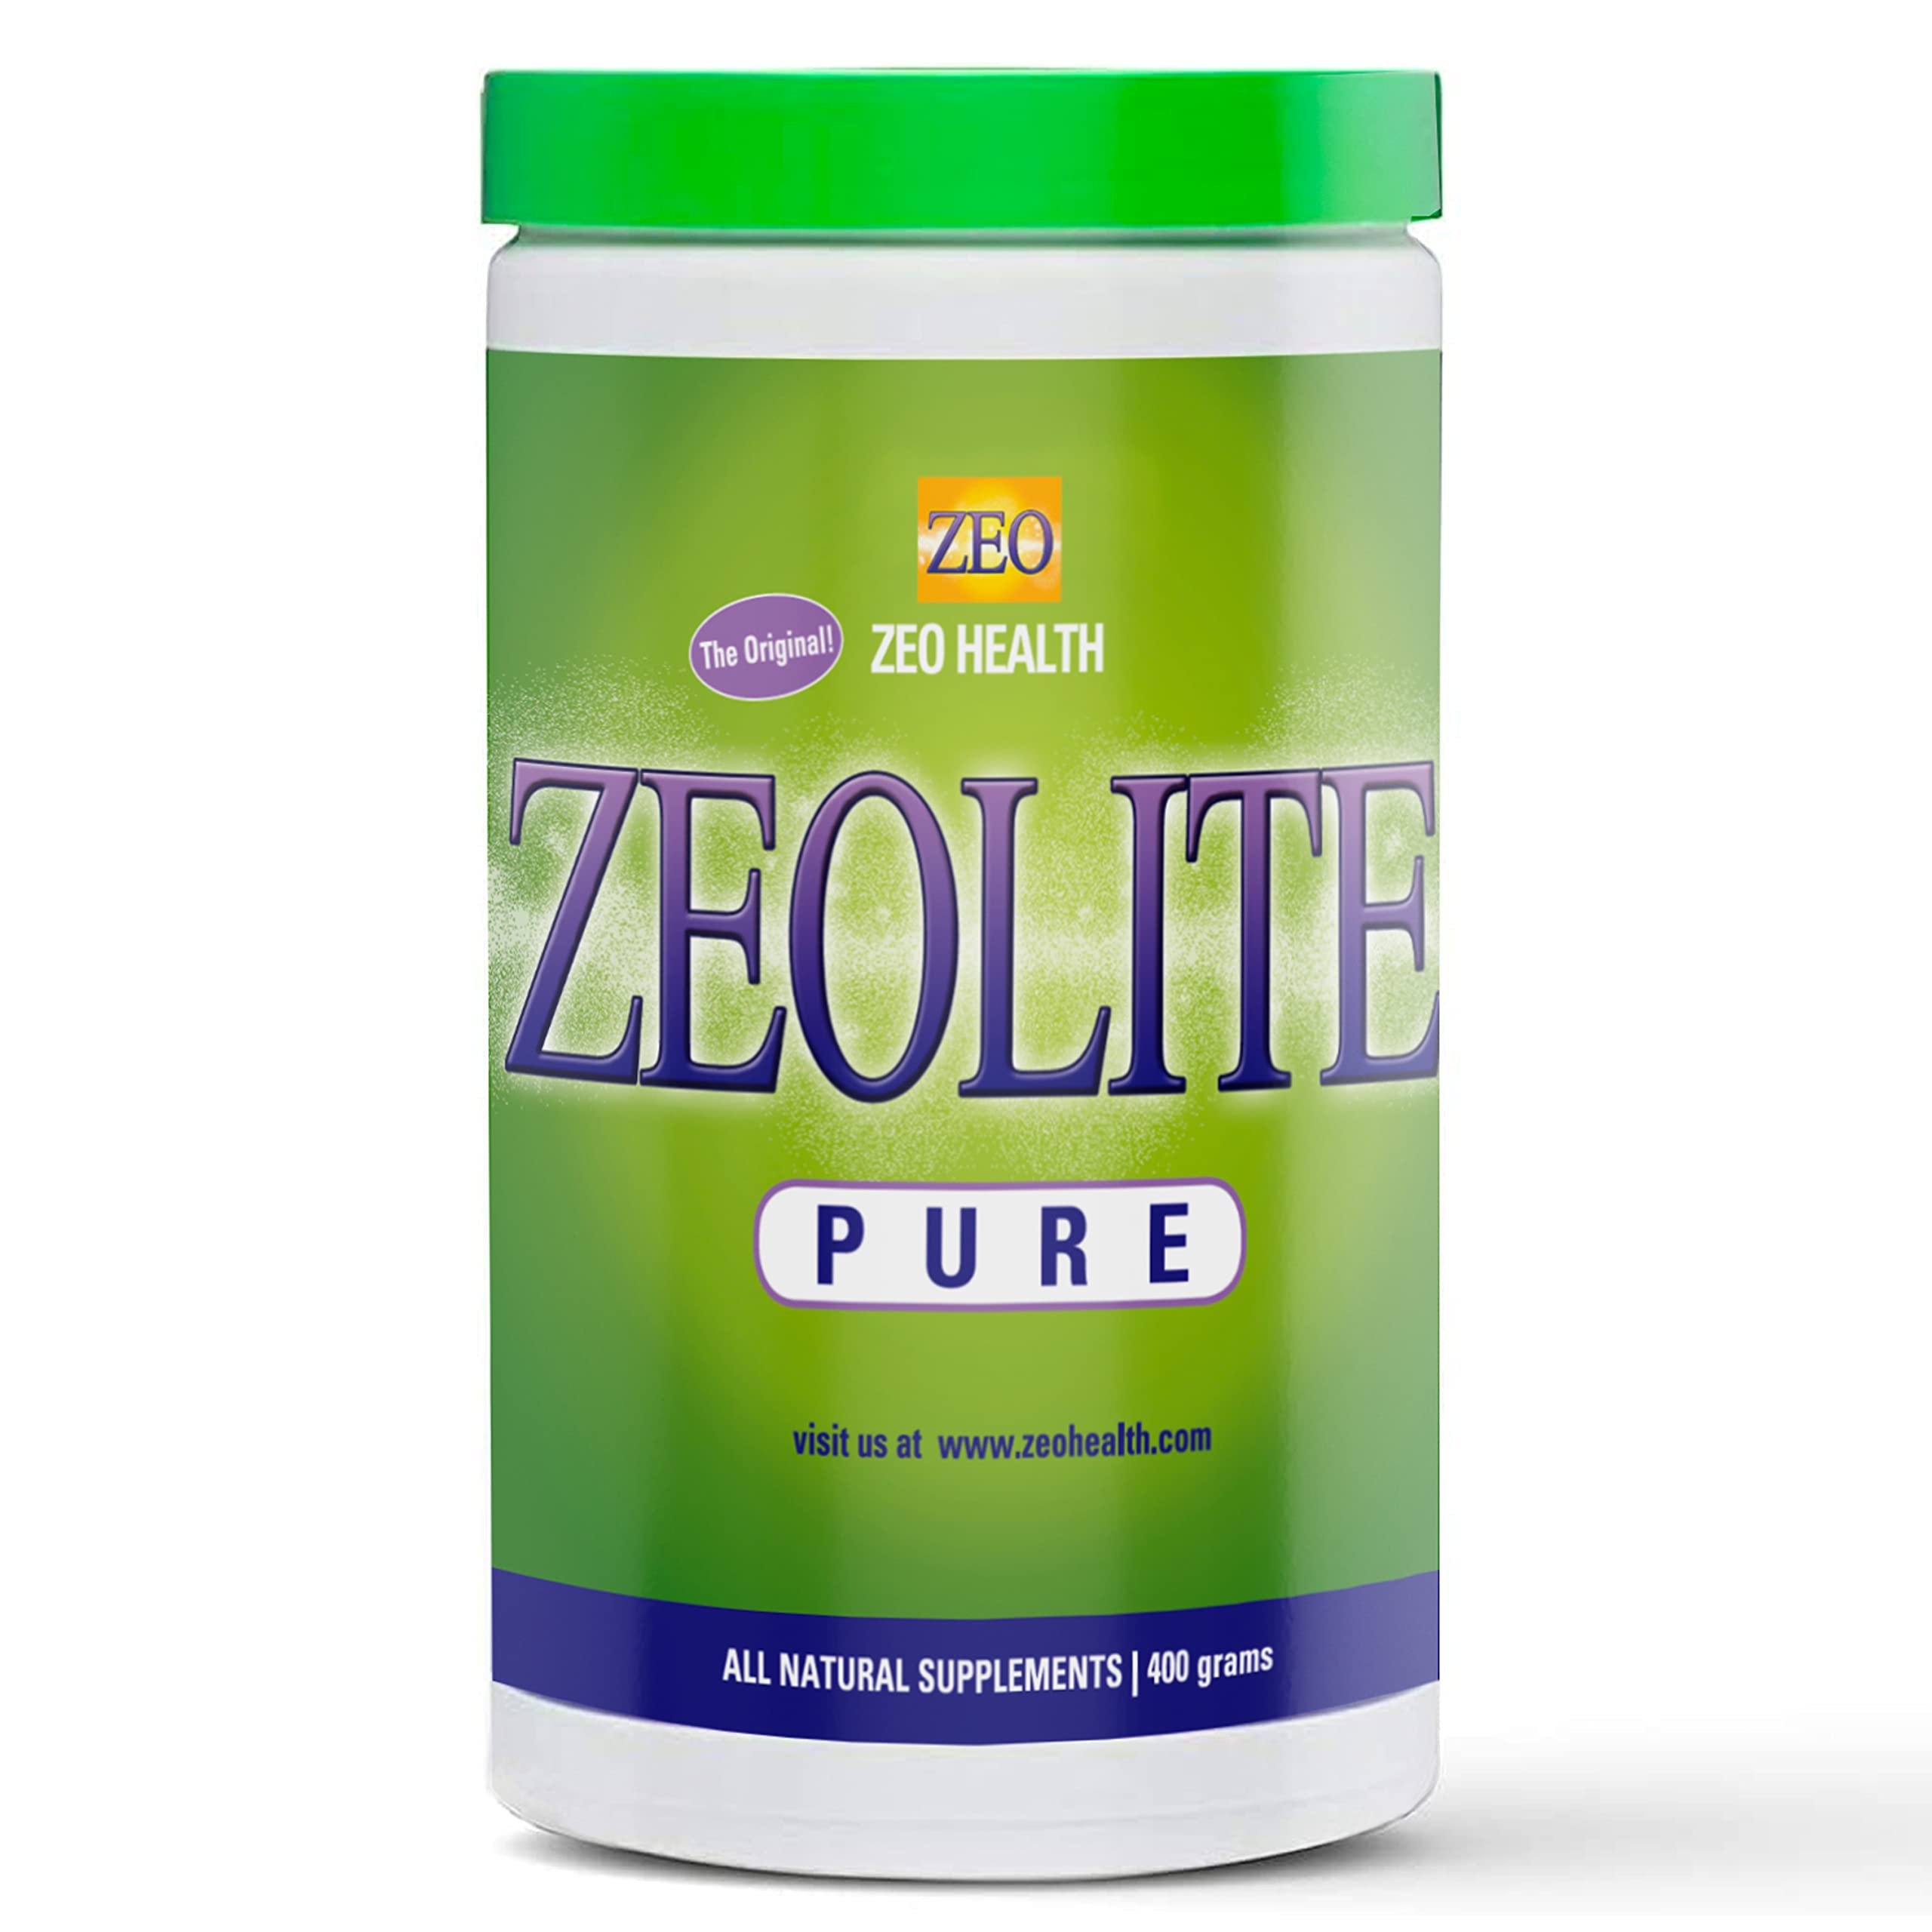 zeolite detox reviews